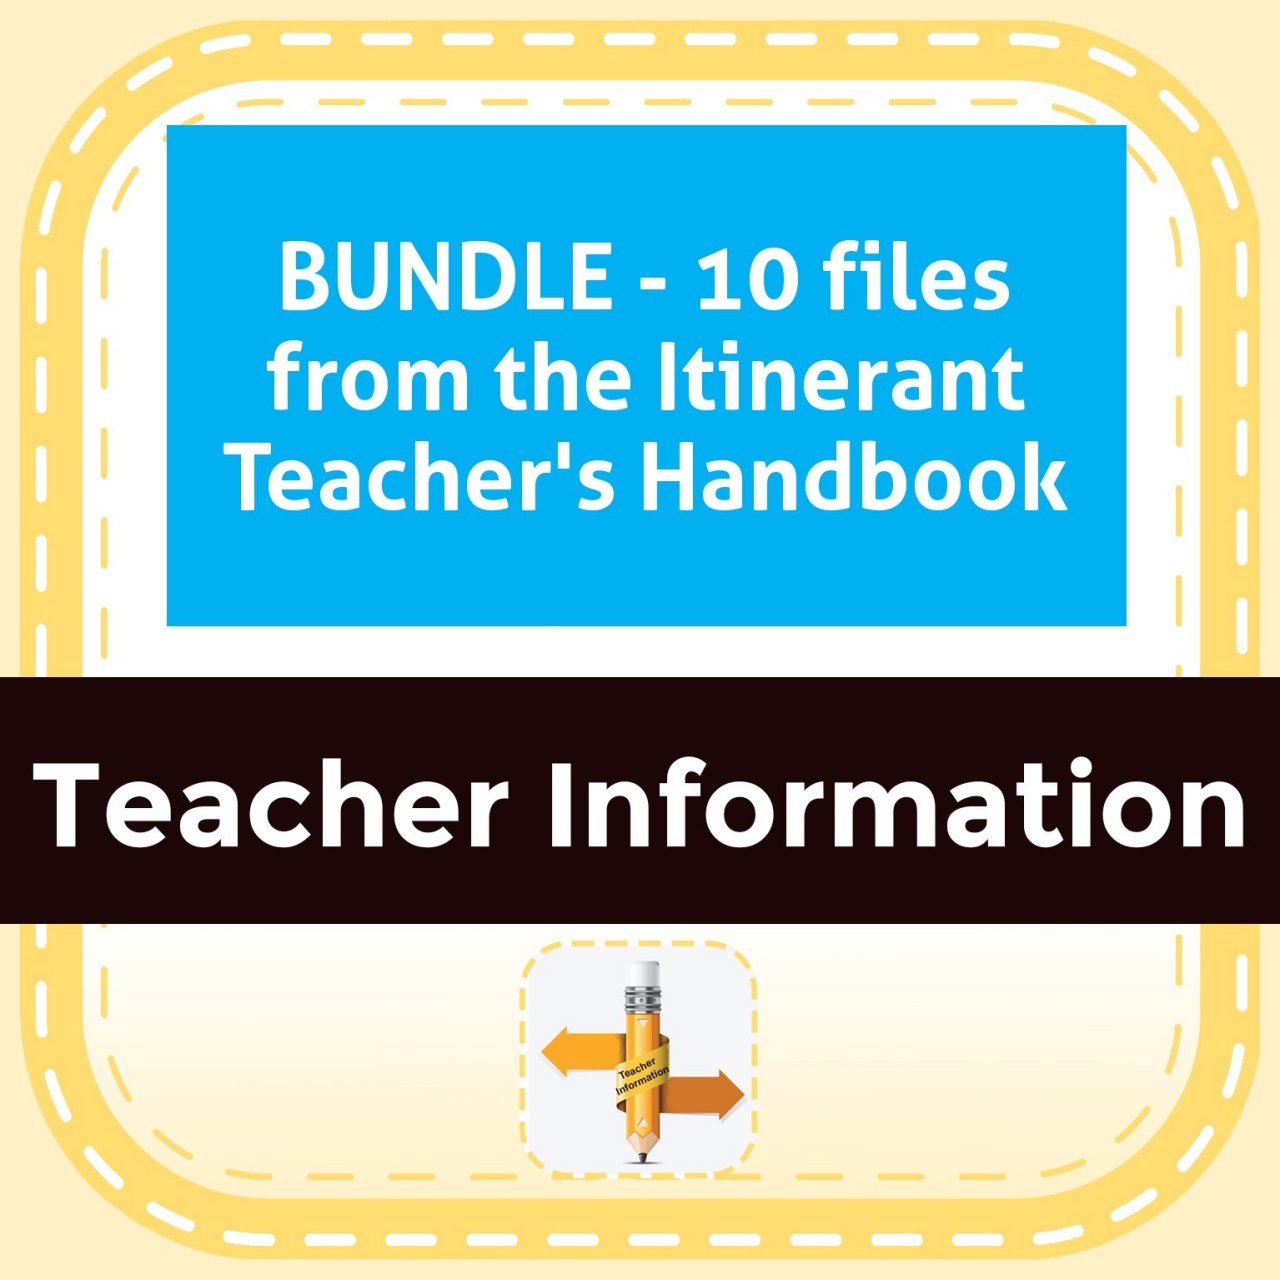 BUNDLE - 10 files from the Itinerant Teacher's Handbook